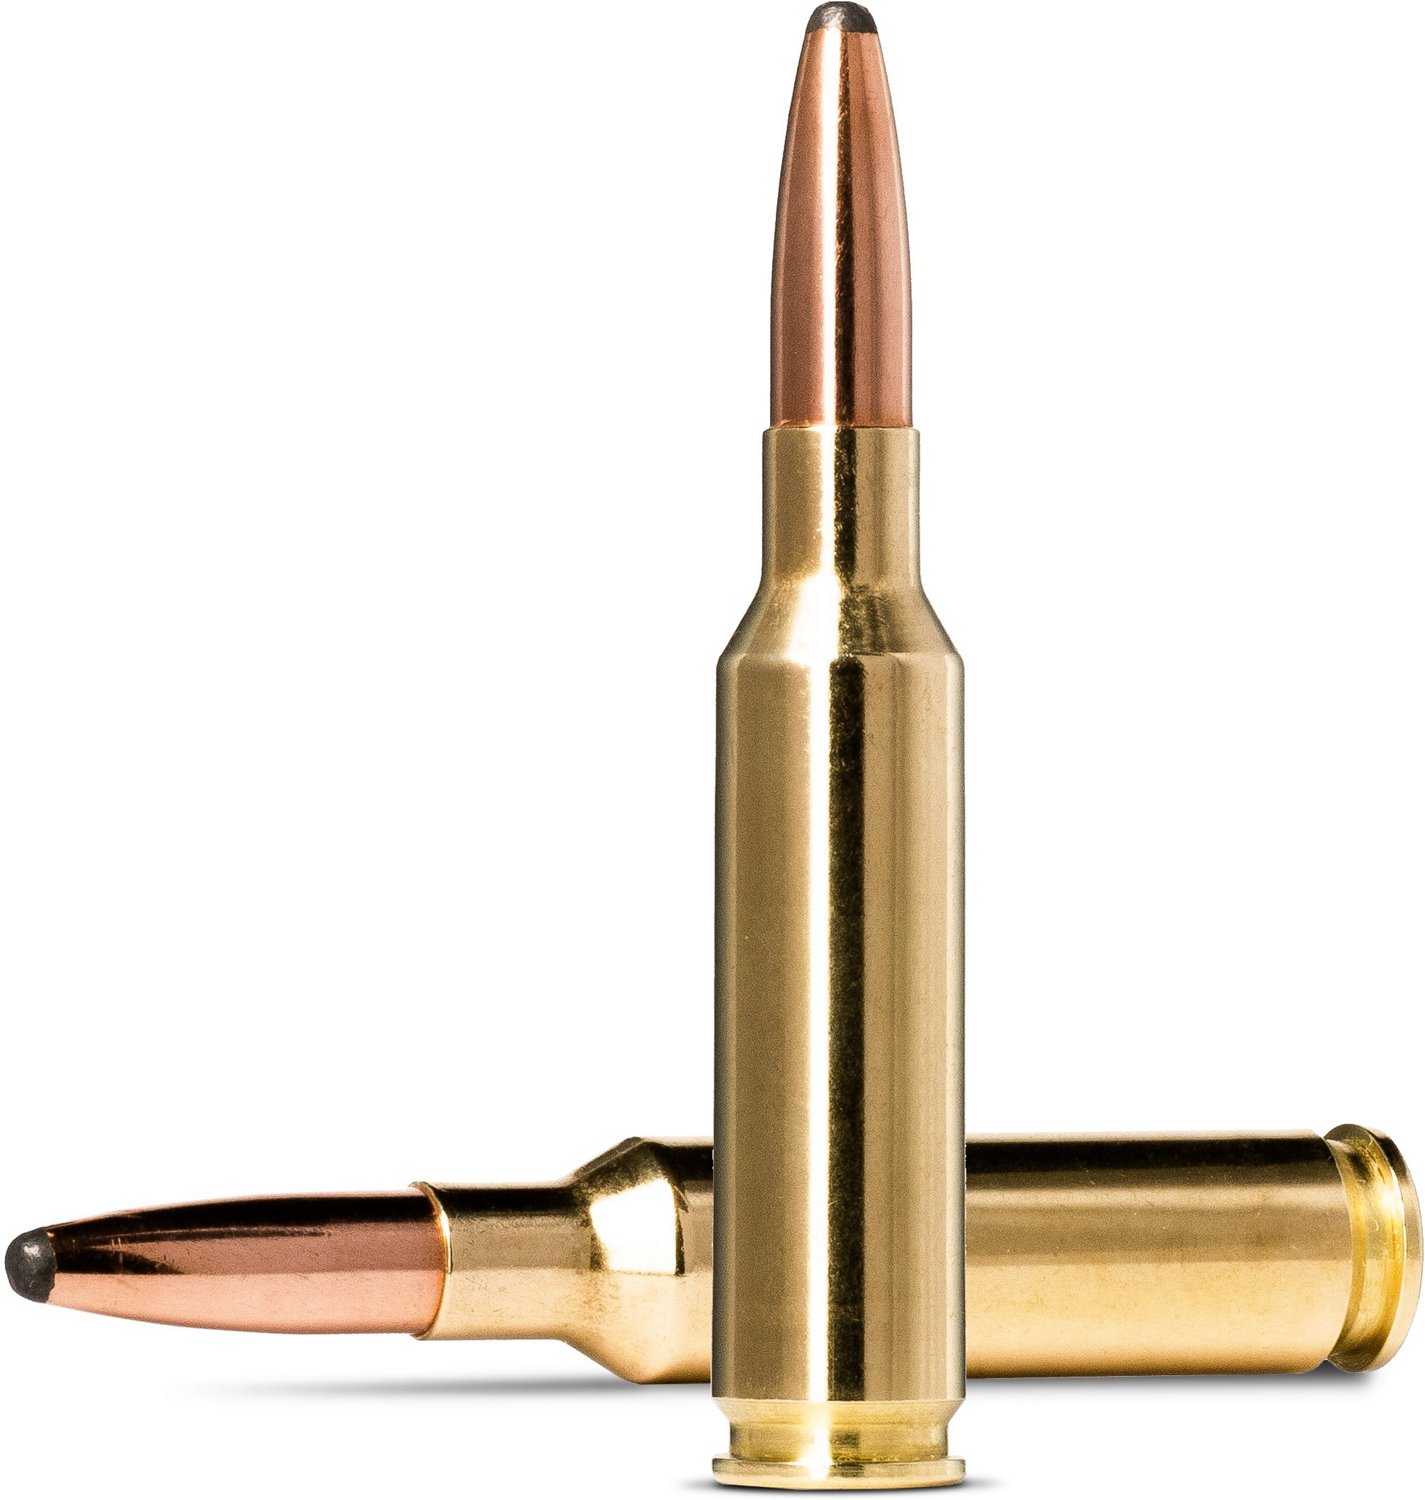 Norma USA Whitetail 6.5 Creedmoor 140-Grain Centerfire Rifle Ammunition - 20 Rounds